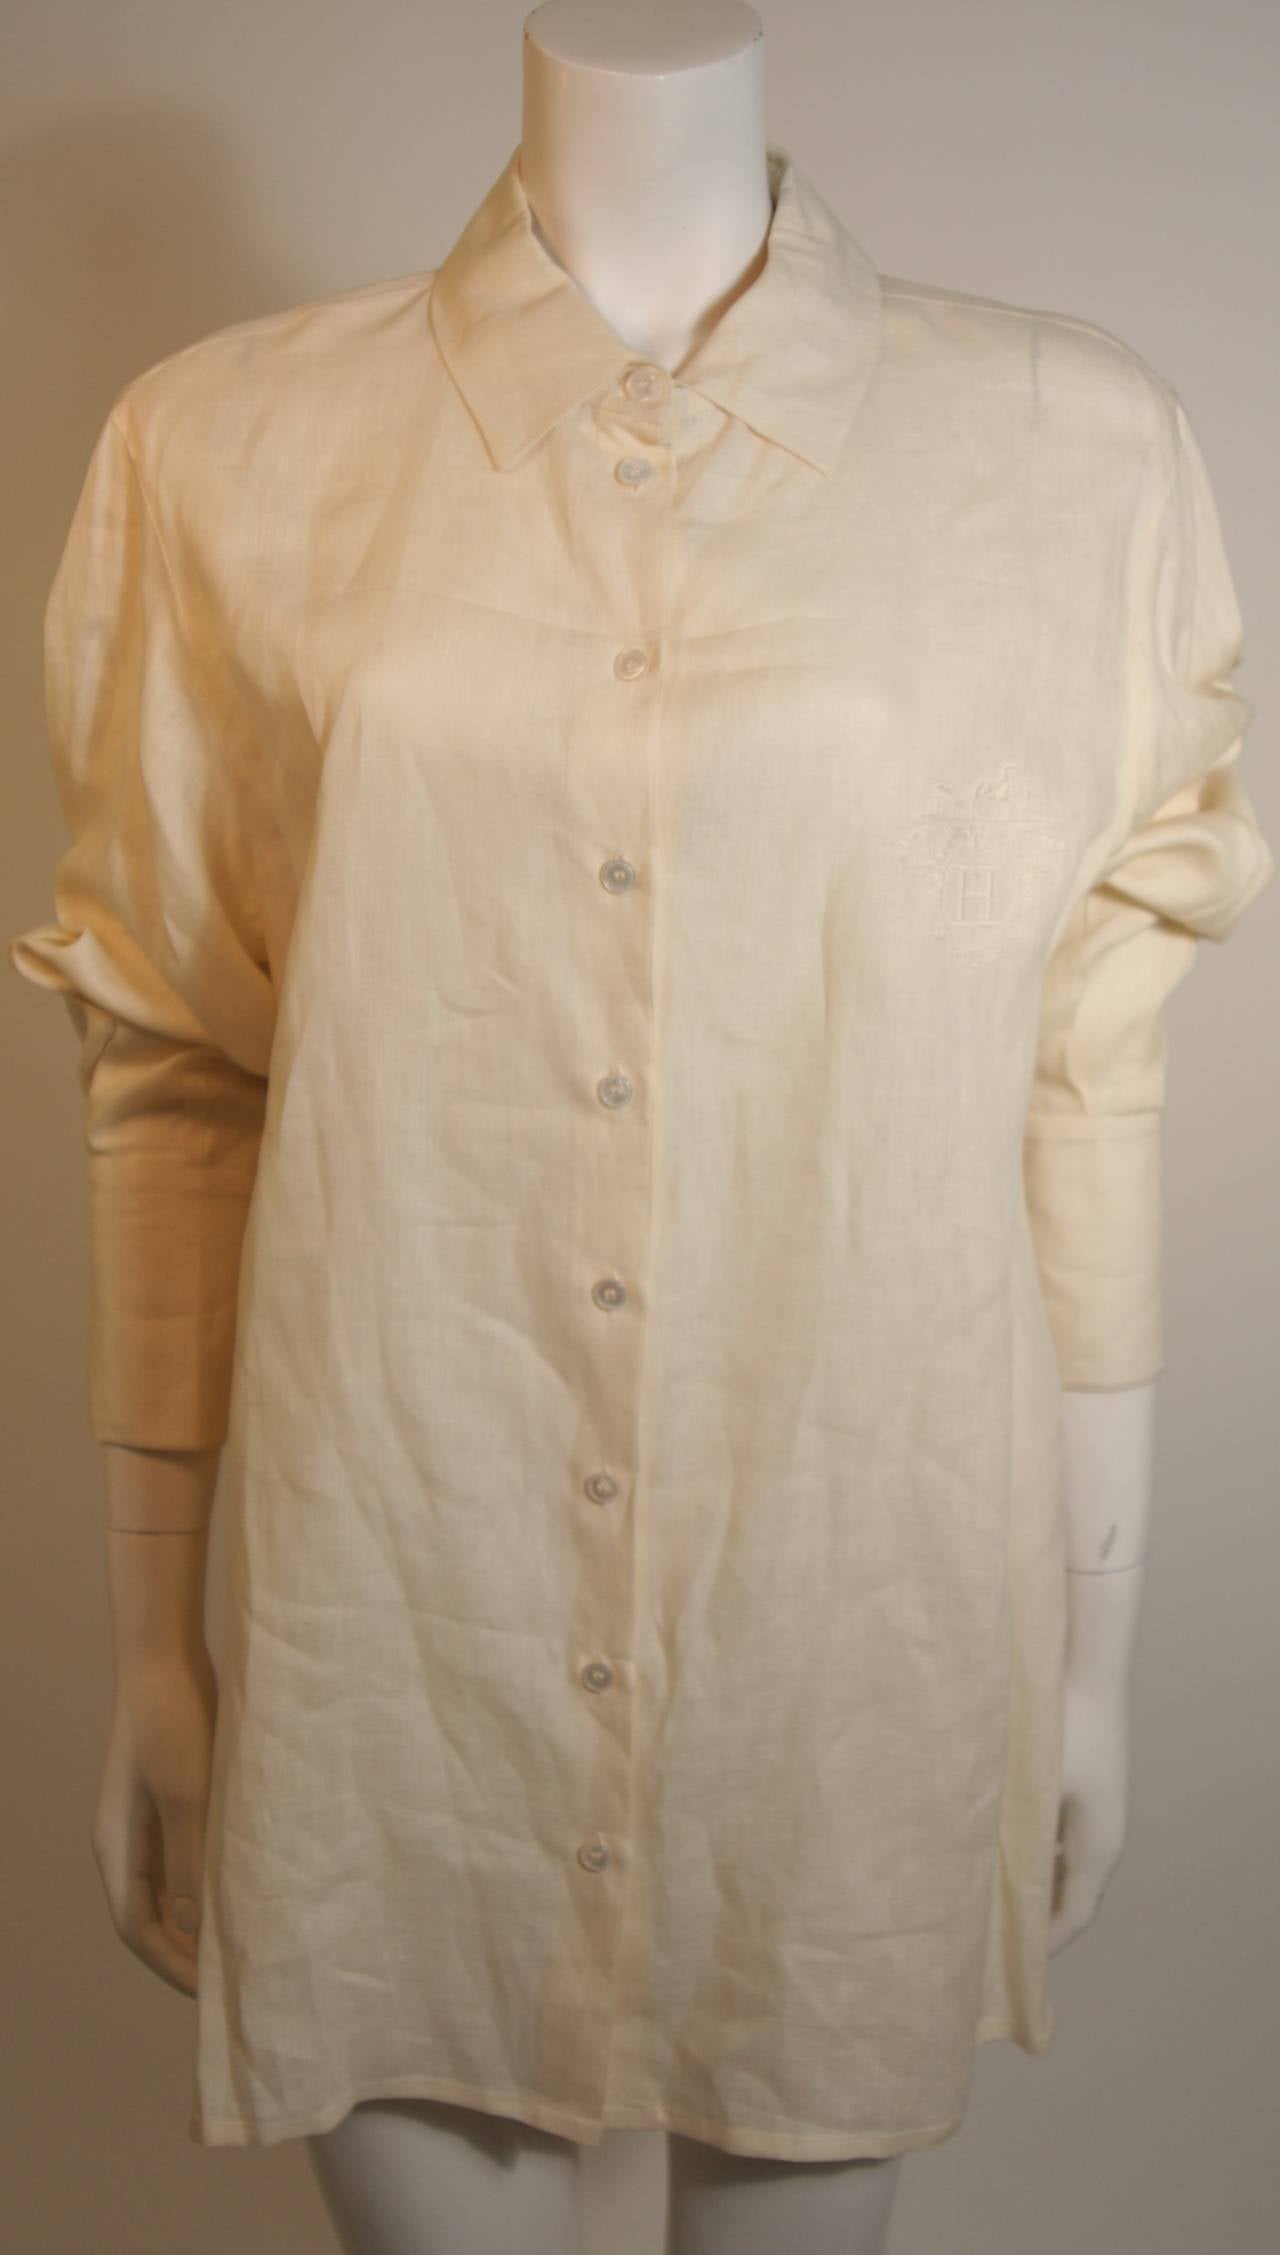 Women's Hermes Linen Shirt with Original Tags Size 46